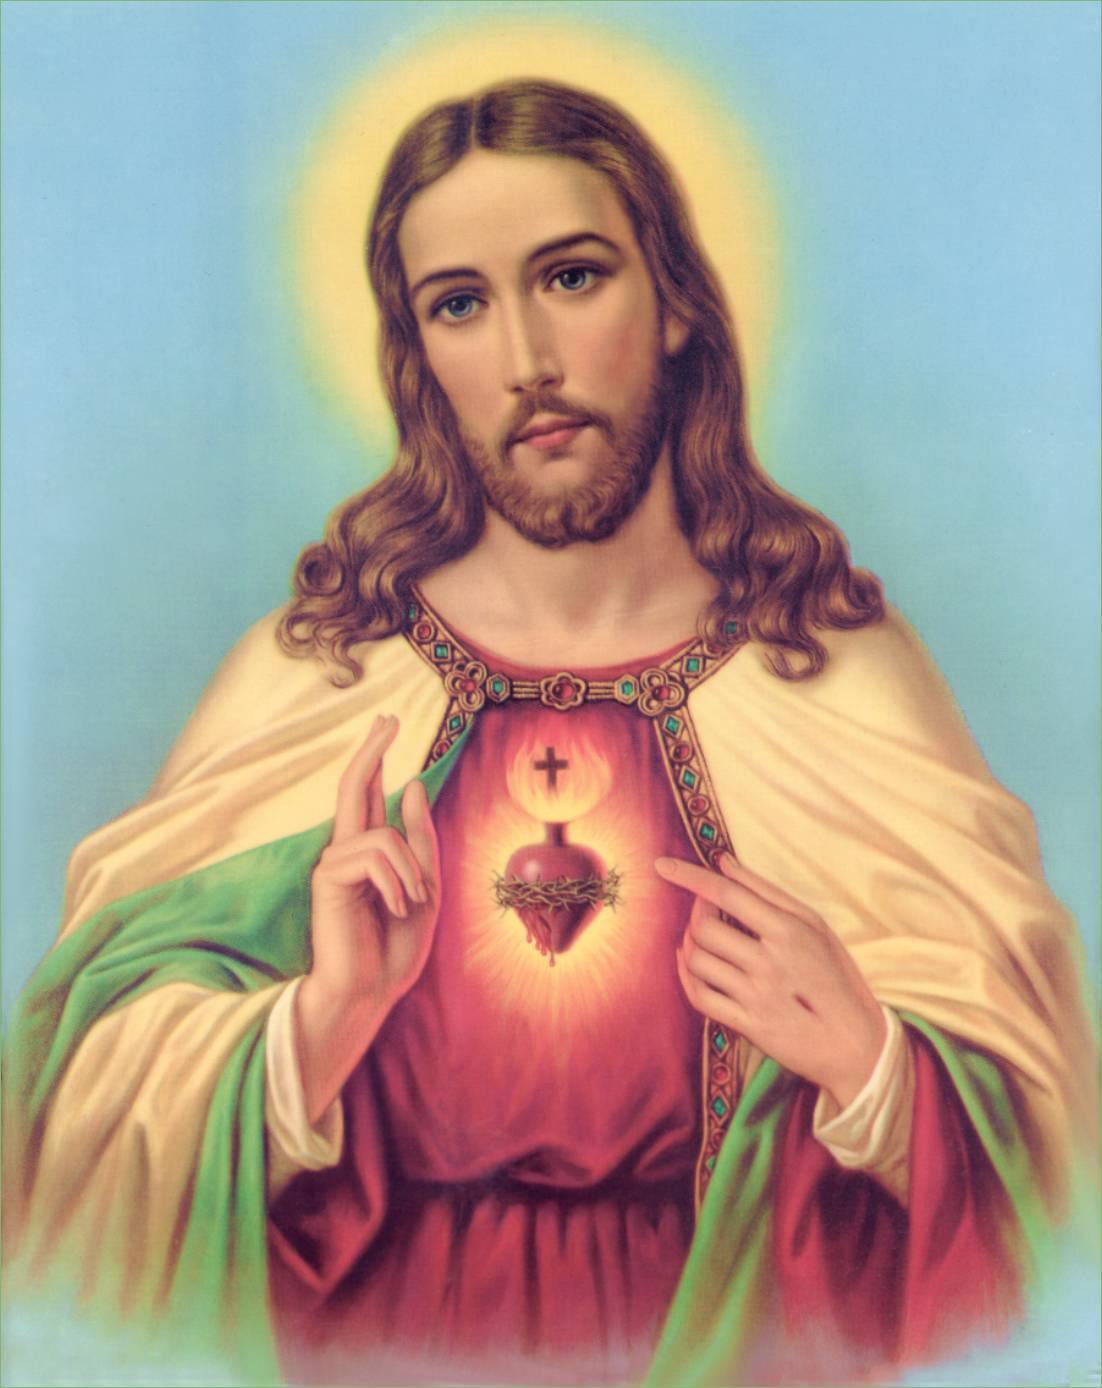 Portrait Of Jesus In Pastel Colors Background